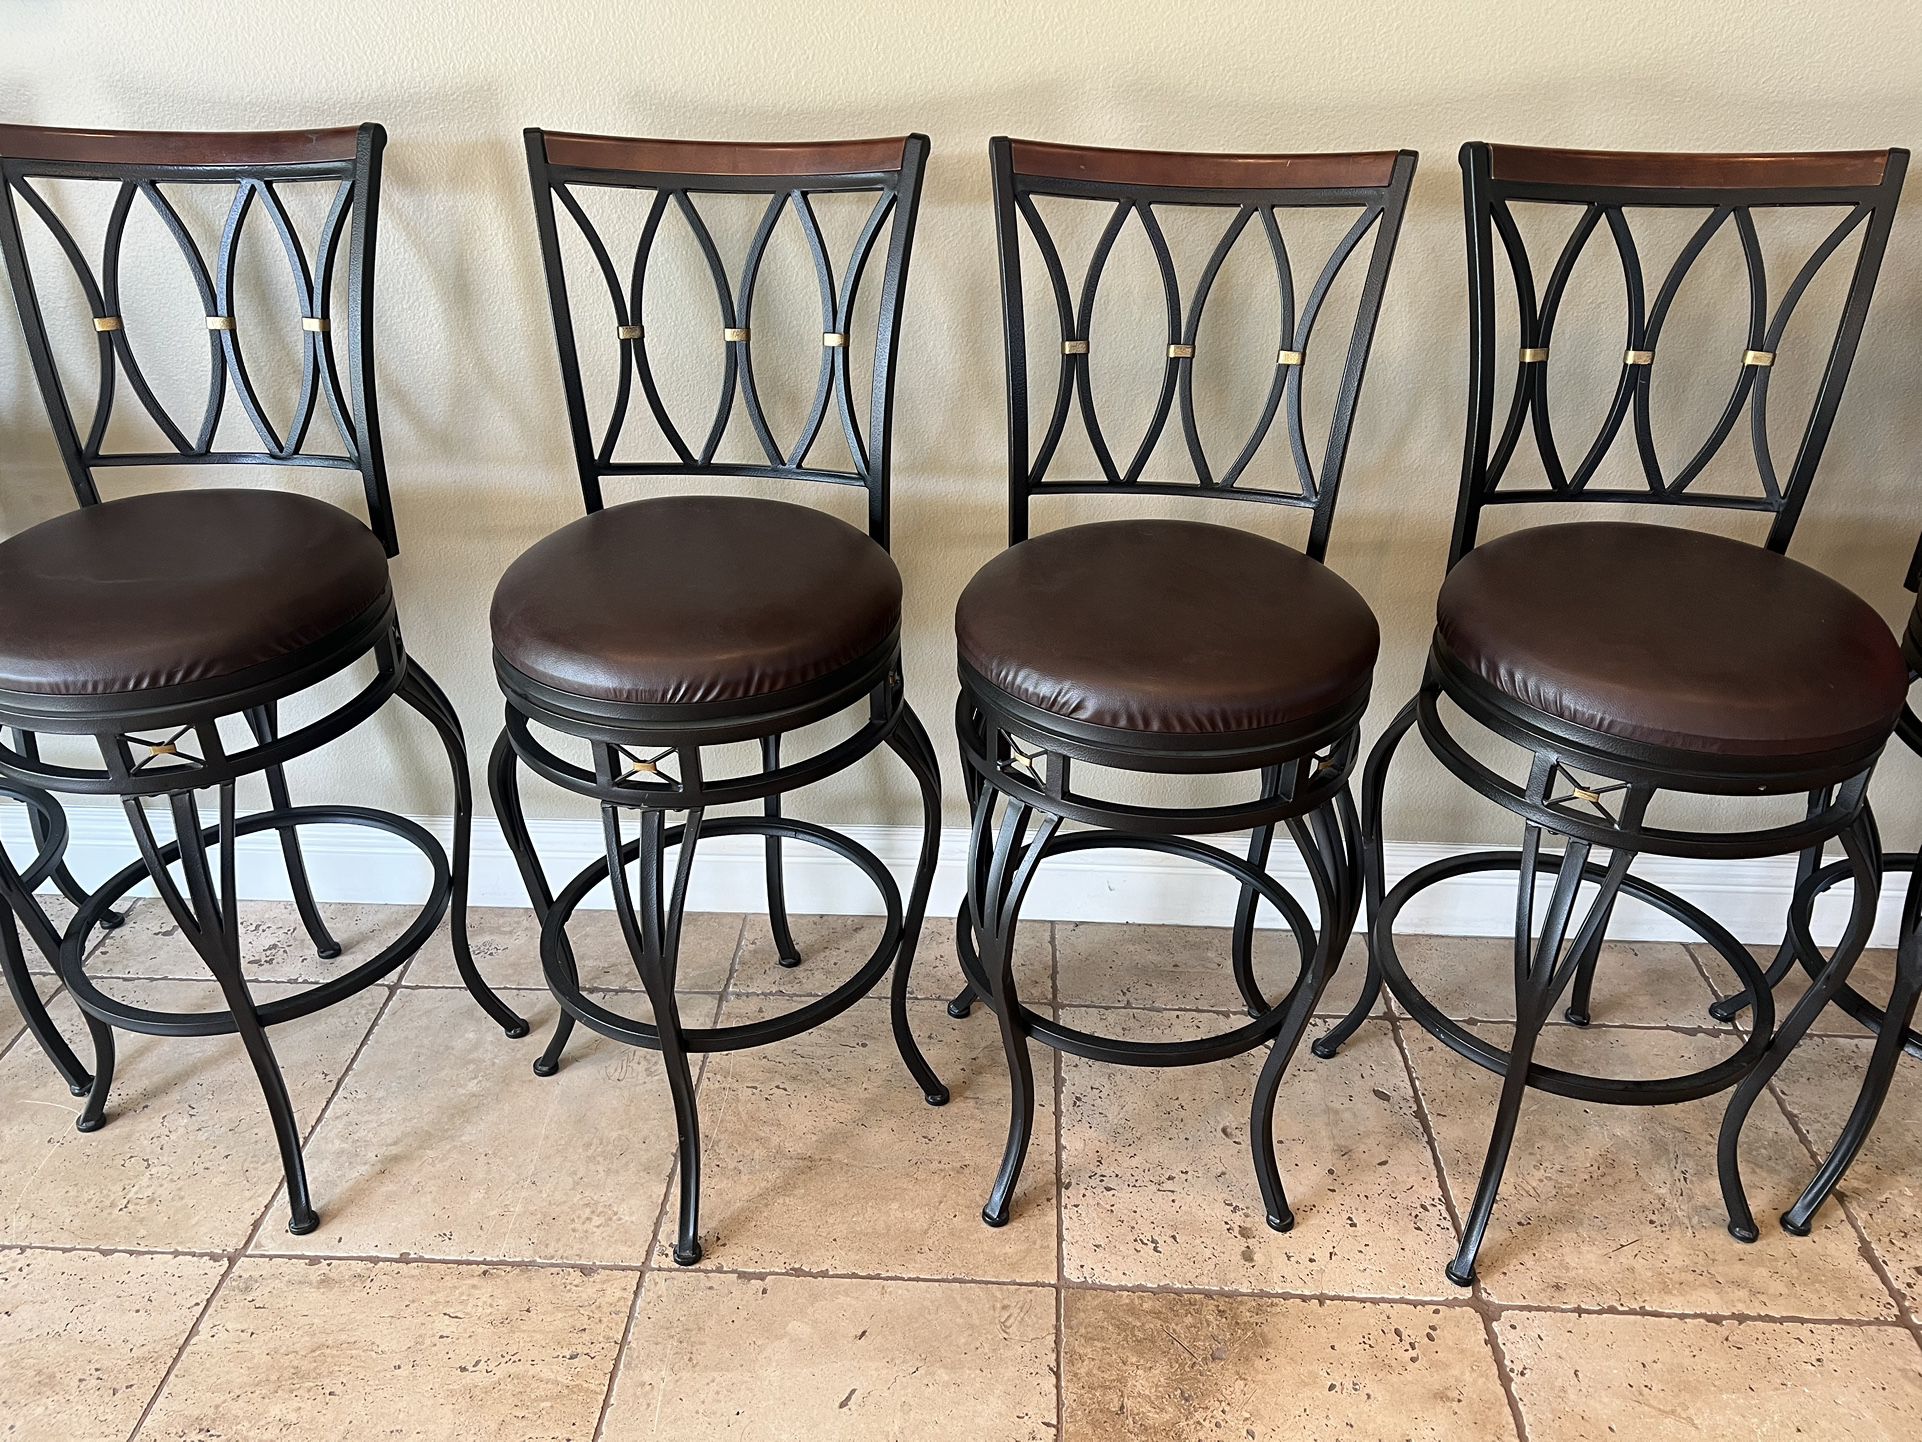 Bar stools 